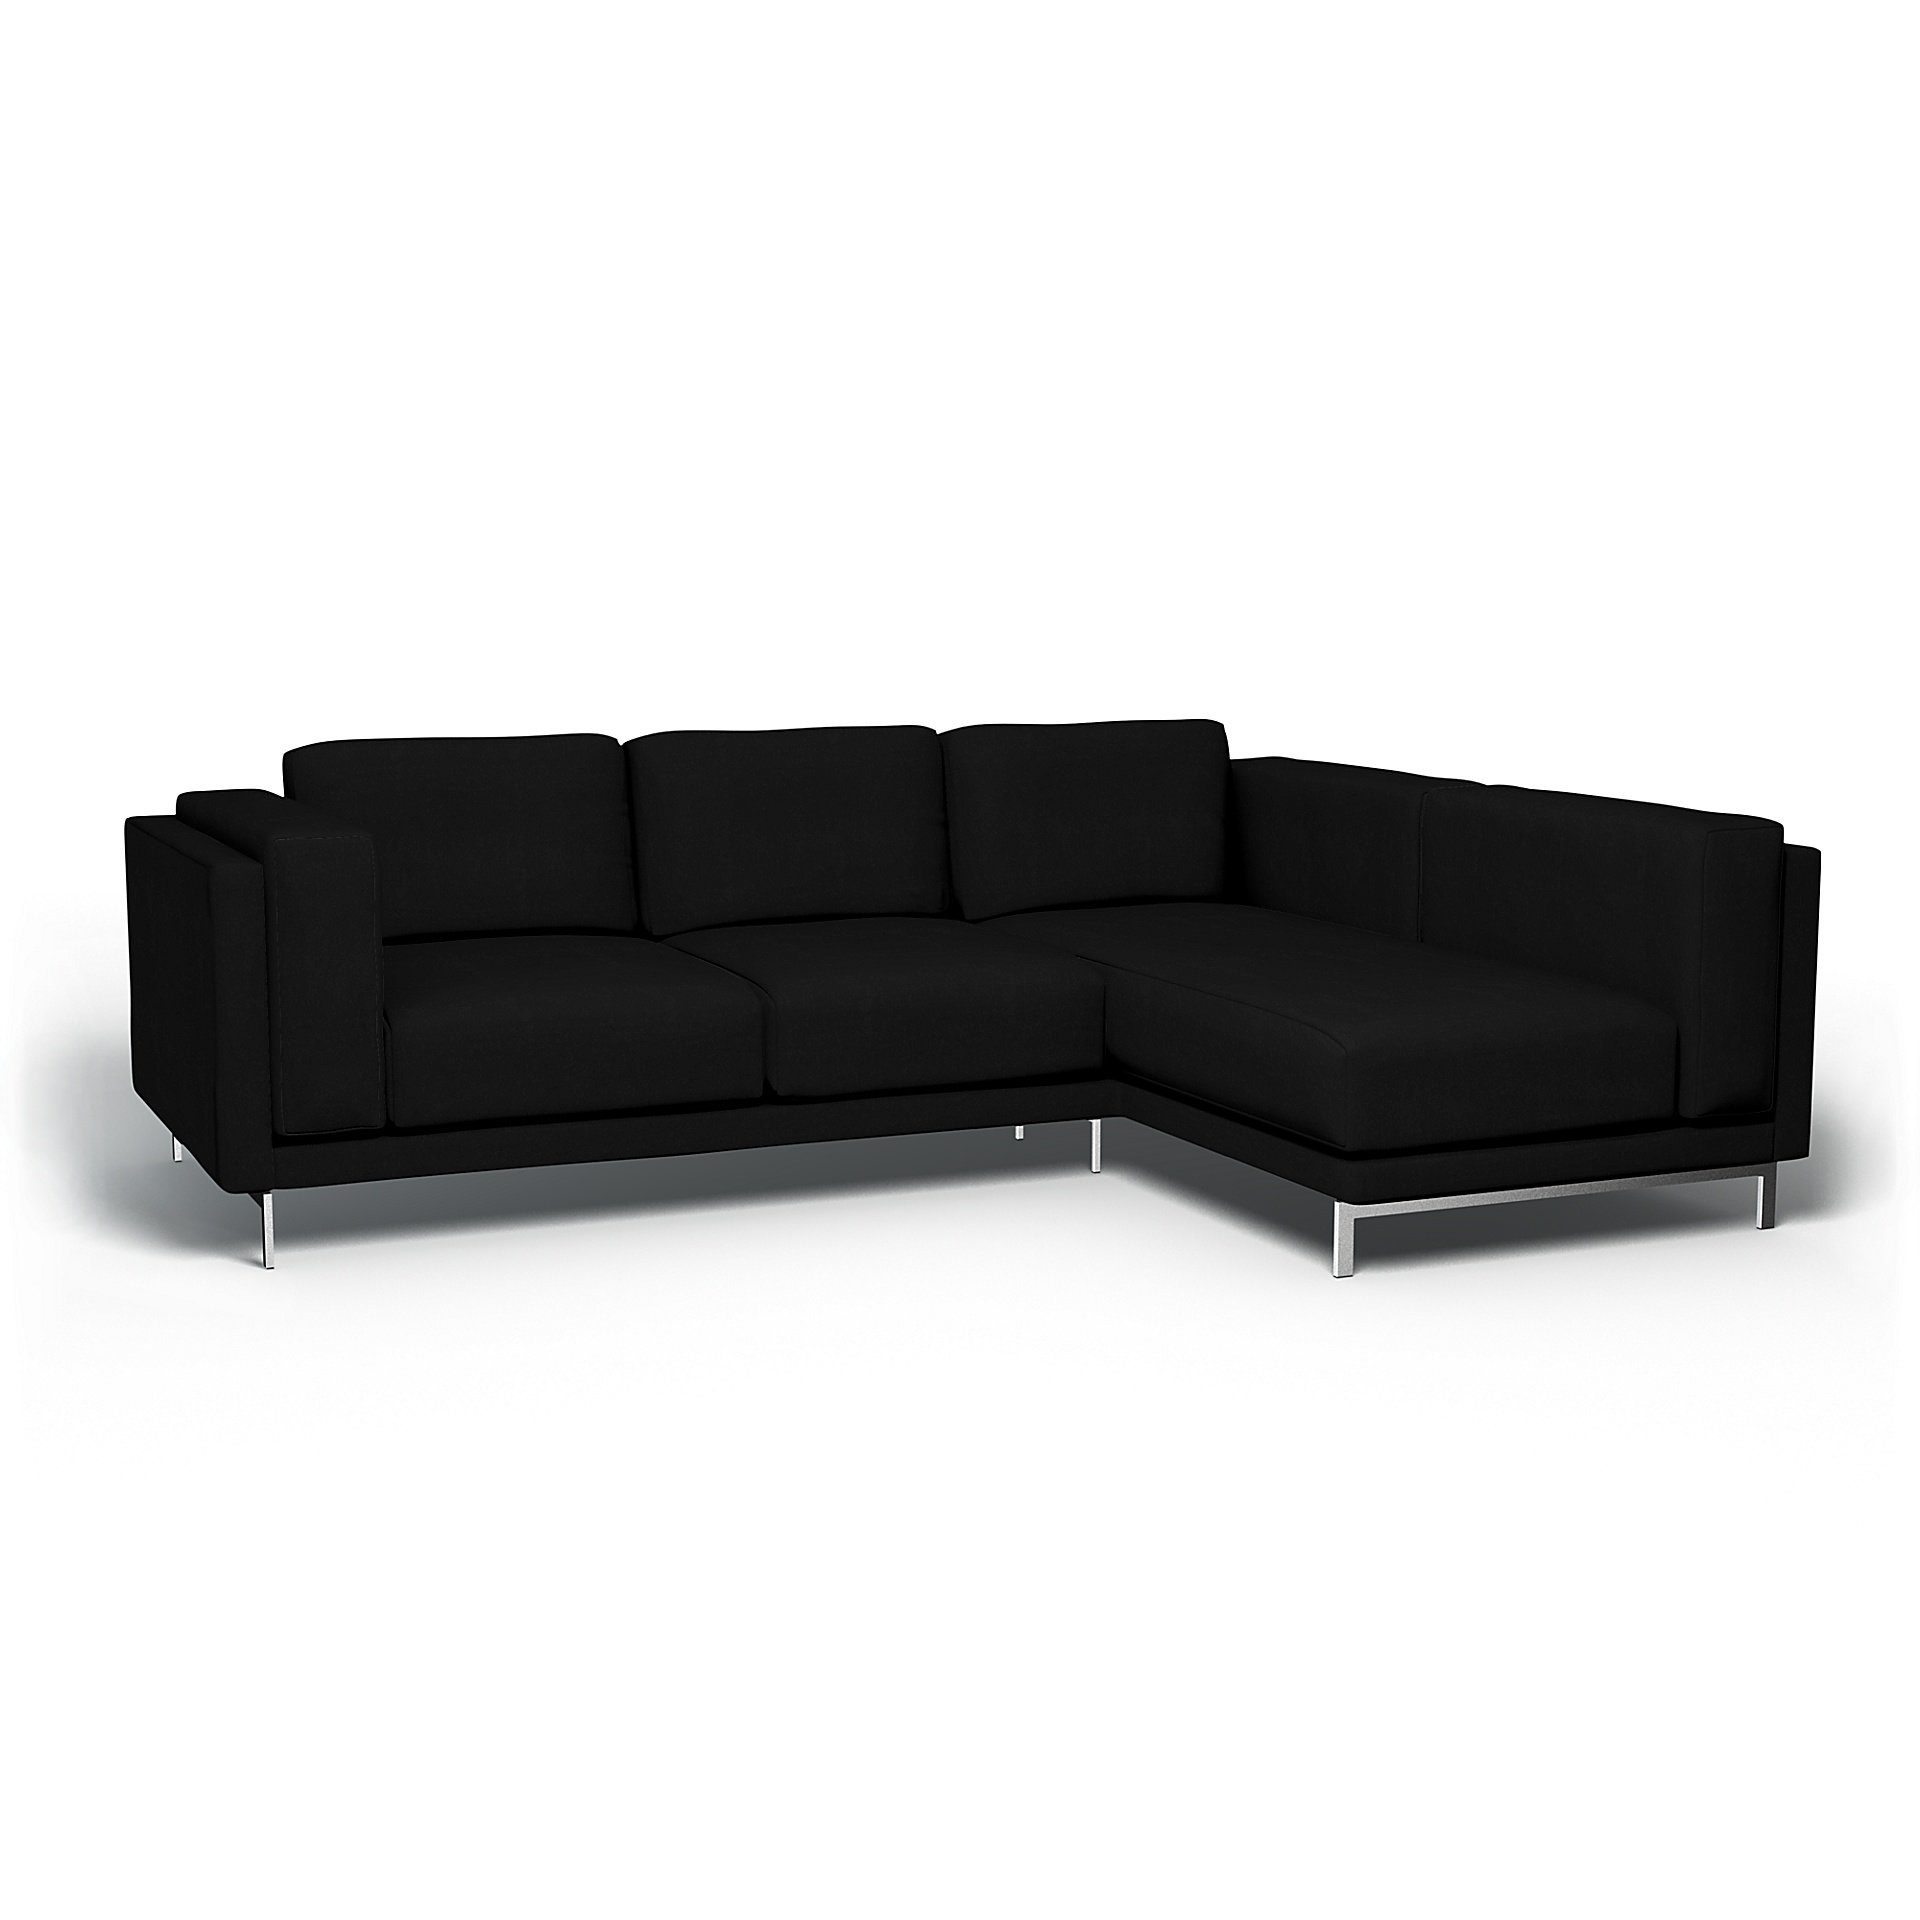 IKEA - Nockeby 3 Seat Sofa with Right Chaise Cover, Black, Velvet - Bemz